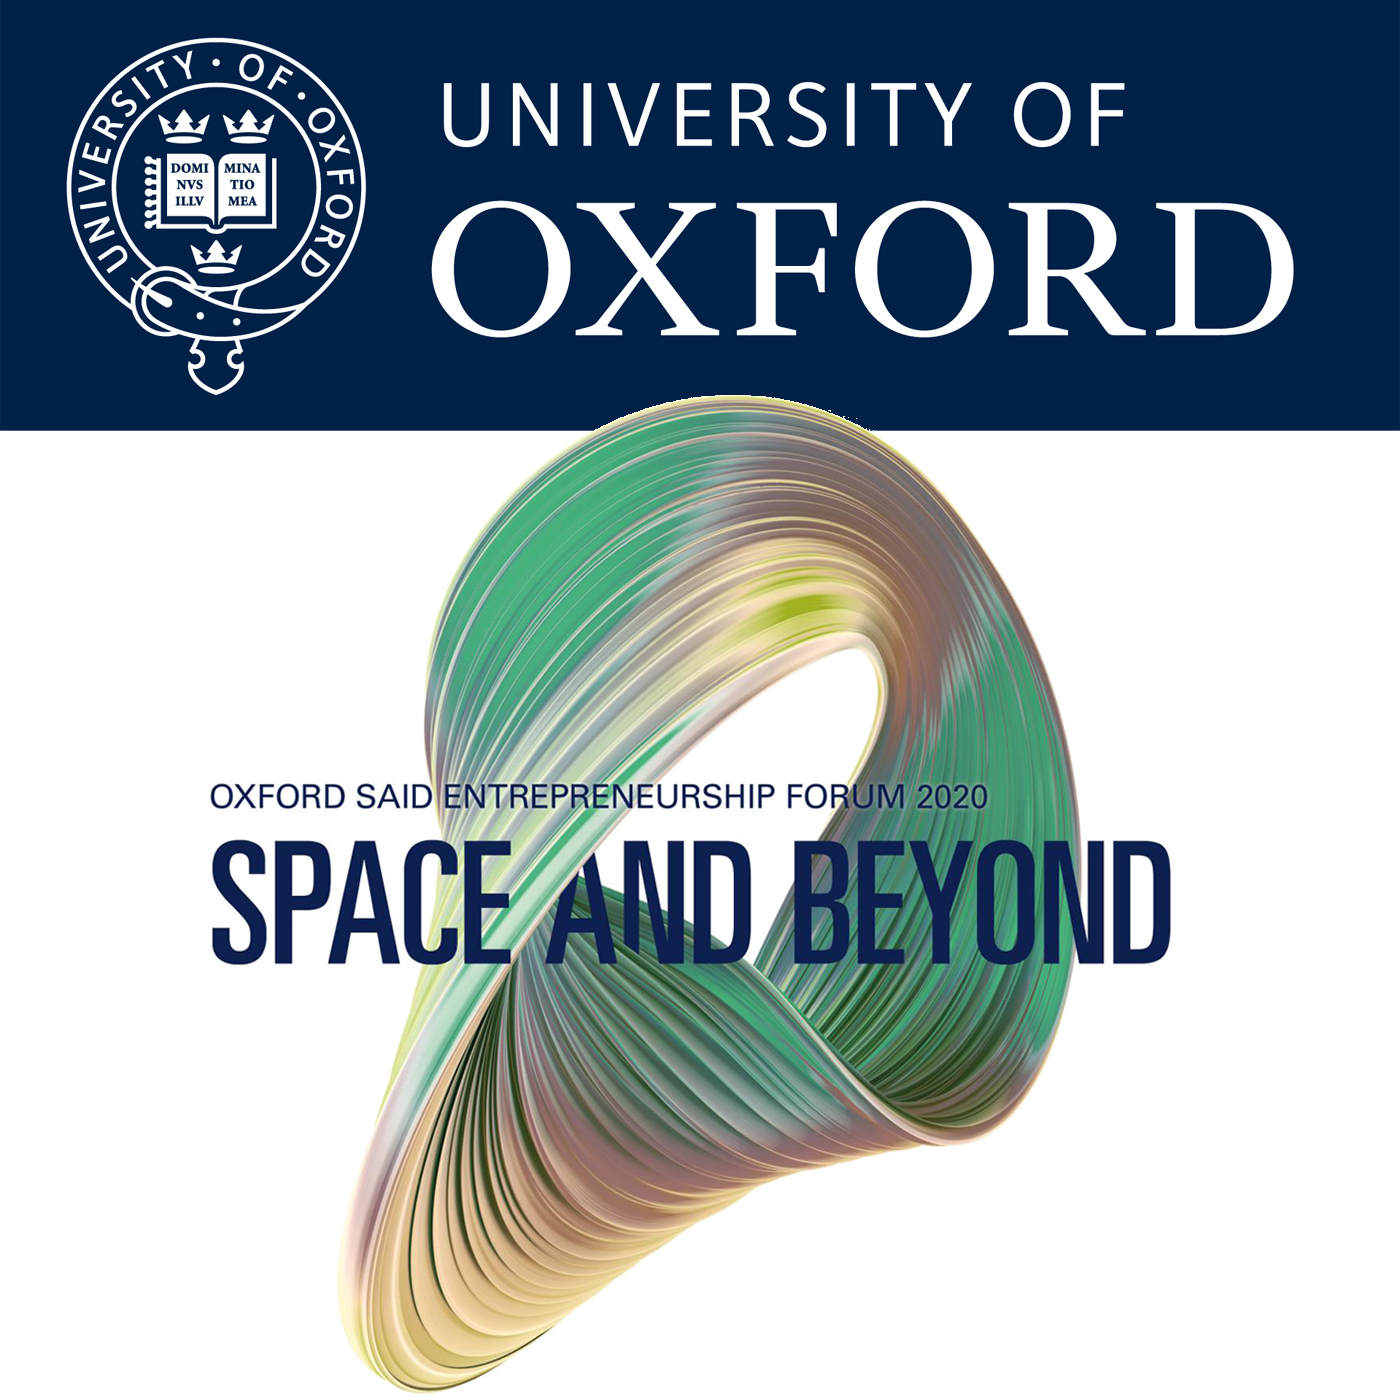 The Oxford Saïd Entrepreneurship Forum